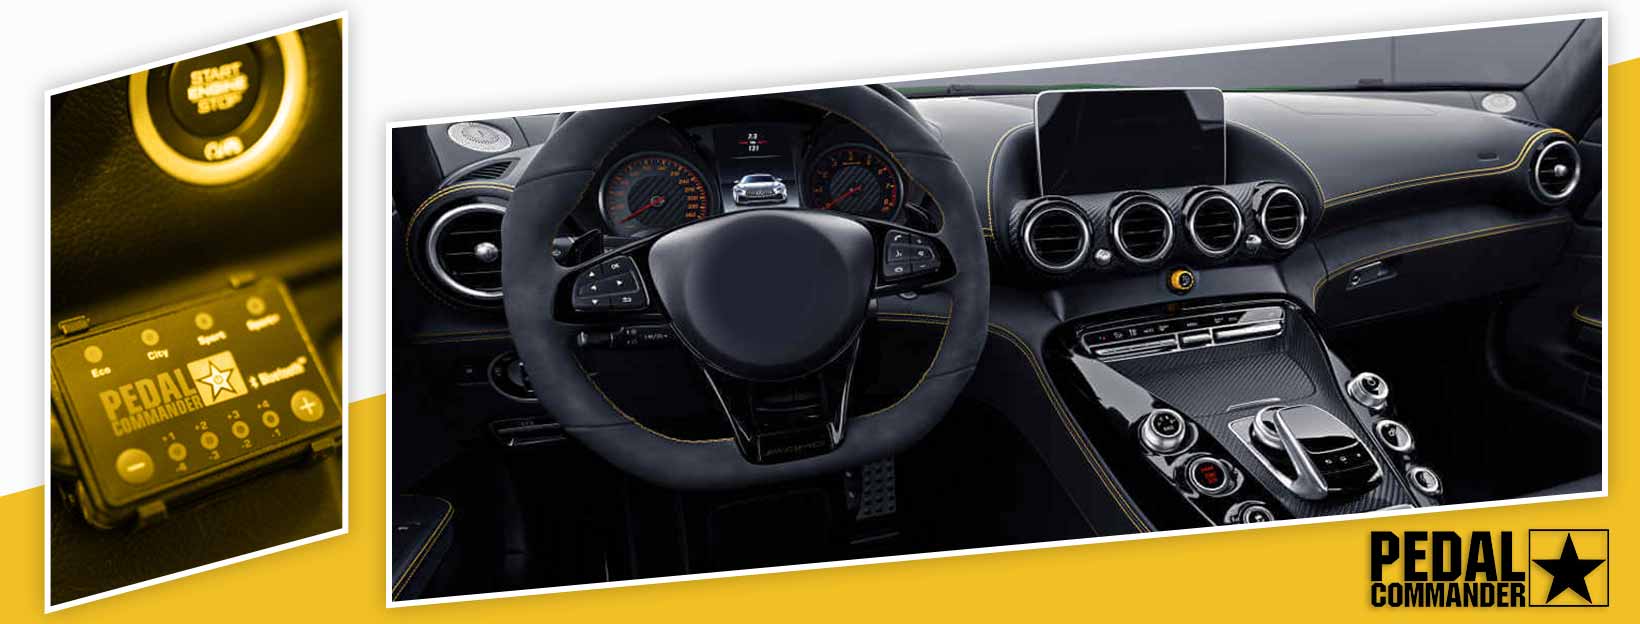 Pedal Commander for Mercedes SLC Class - interior